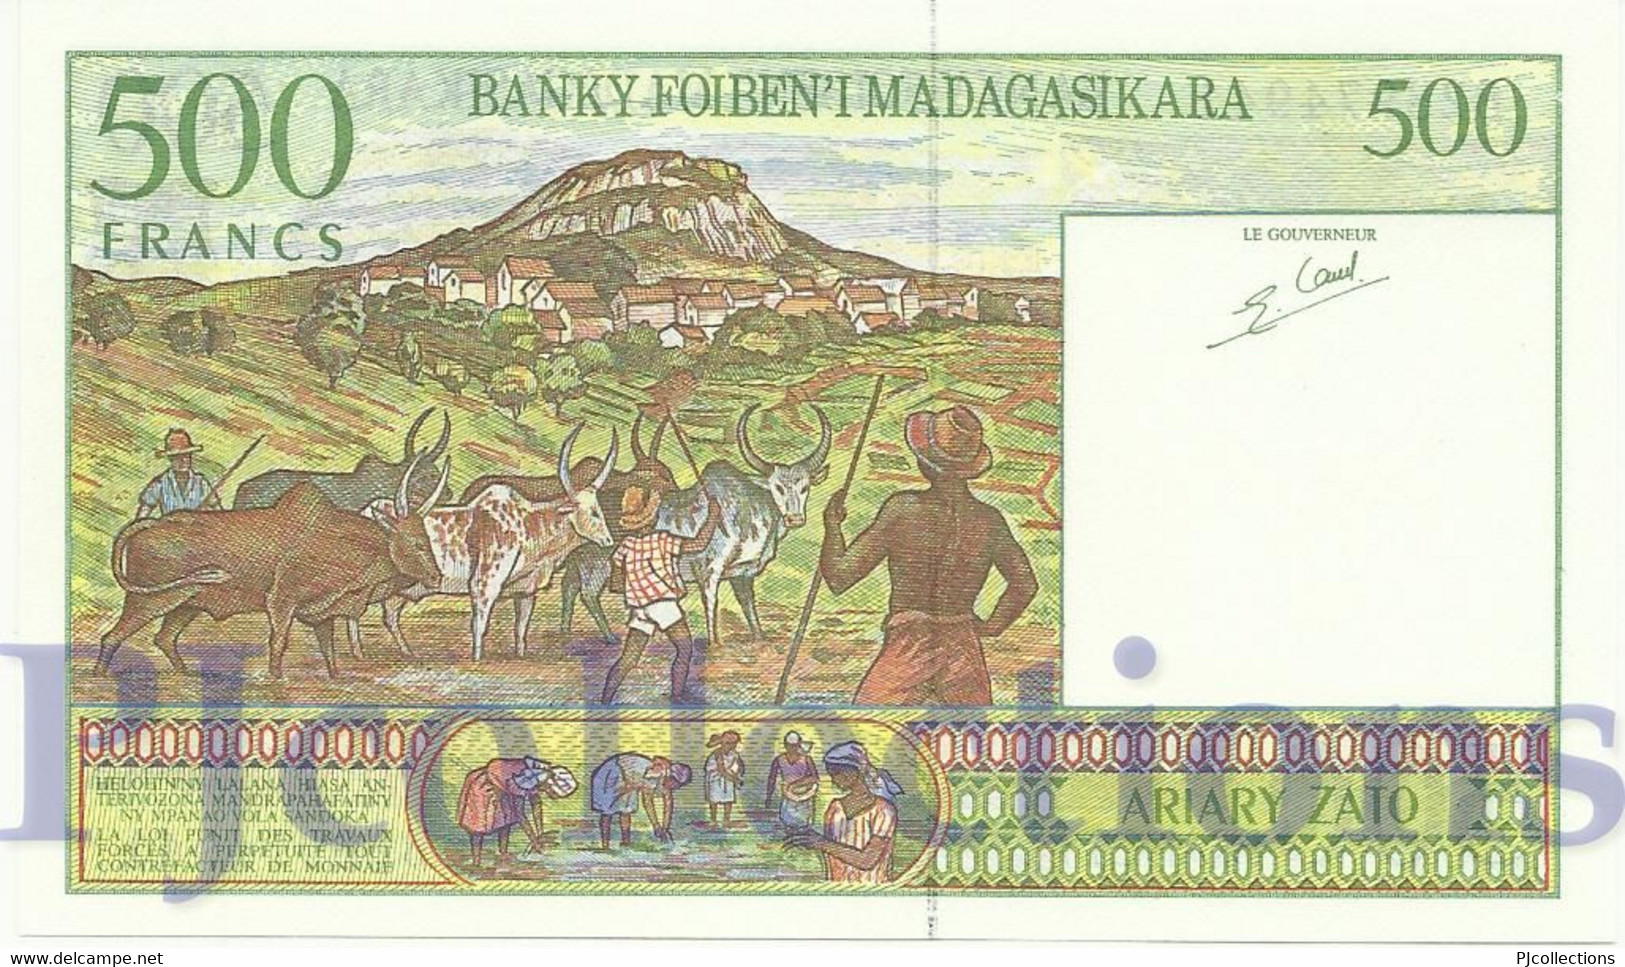 MADAGASCAR 500 FRANCS 1994 PICK 75b UNC PREFIX "A" - Madagascar